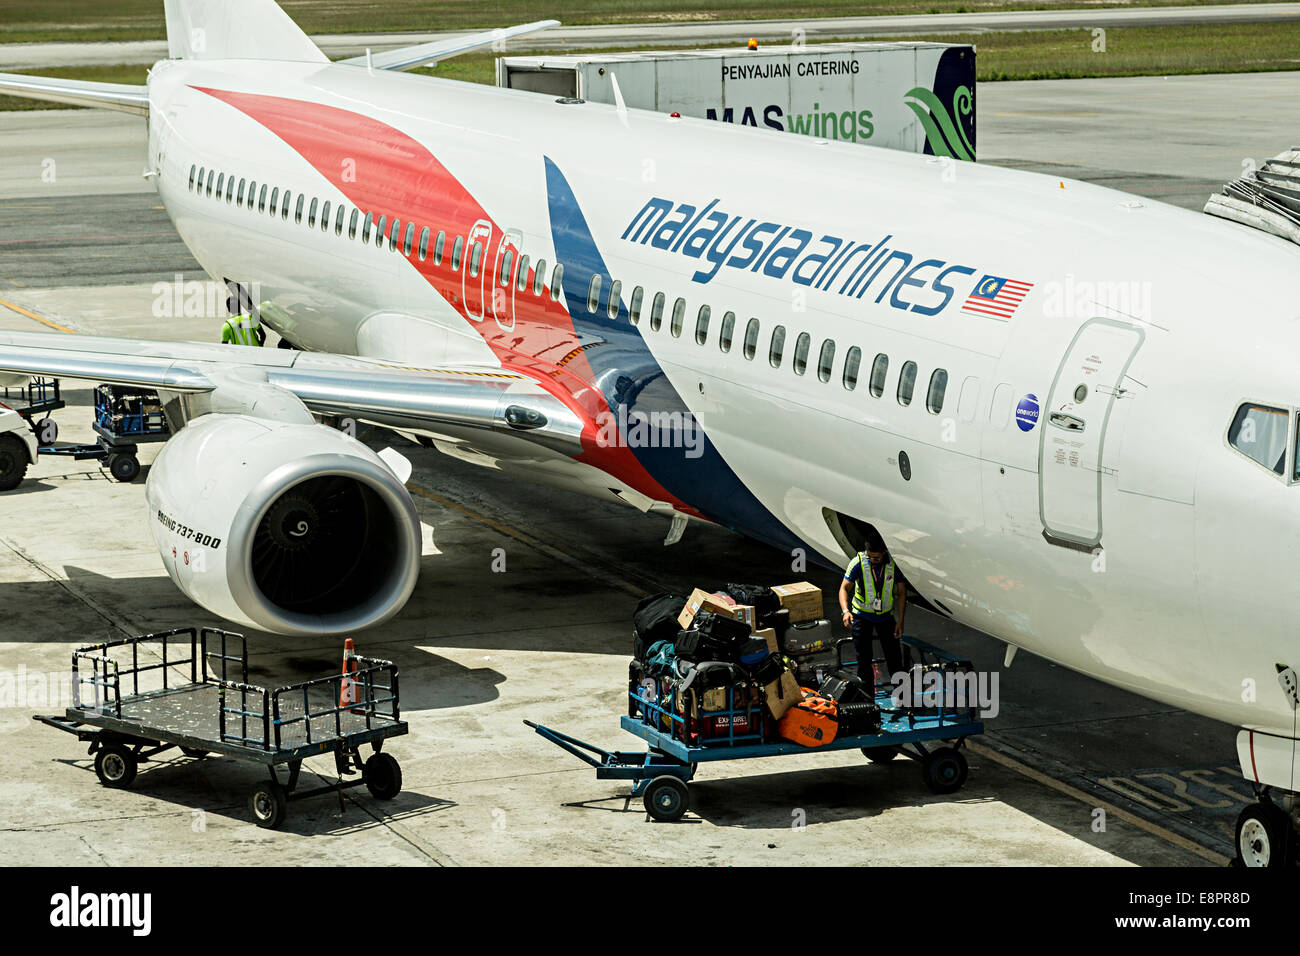 Unloading baggage from Malaysian Airlines aircraft at airport, Miri, Sarawak, Malaysia Stock Photo